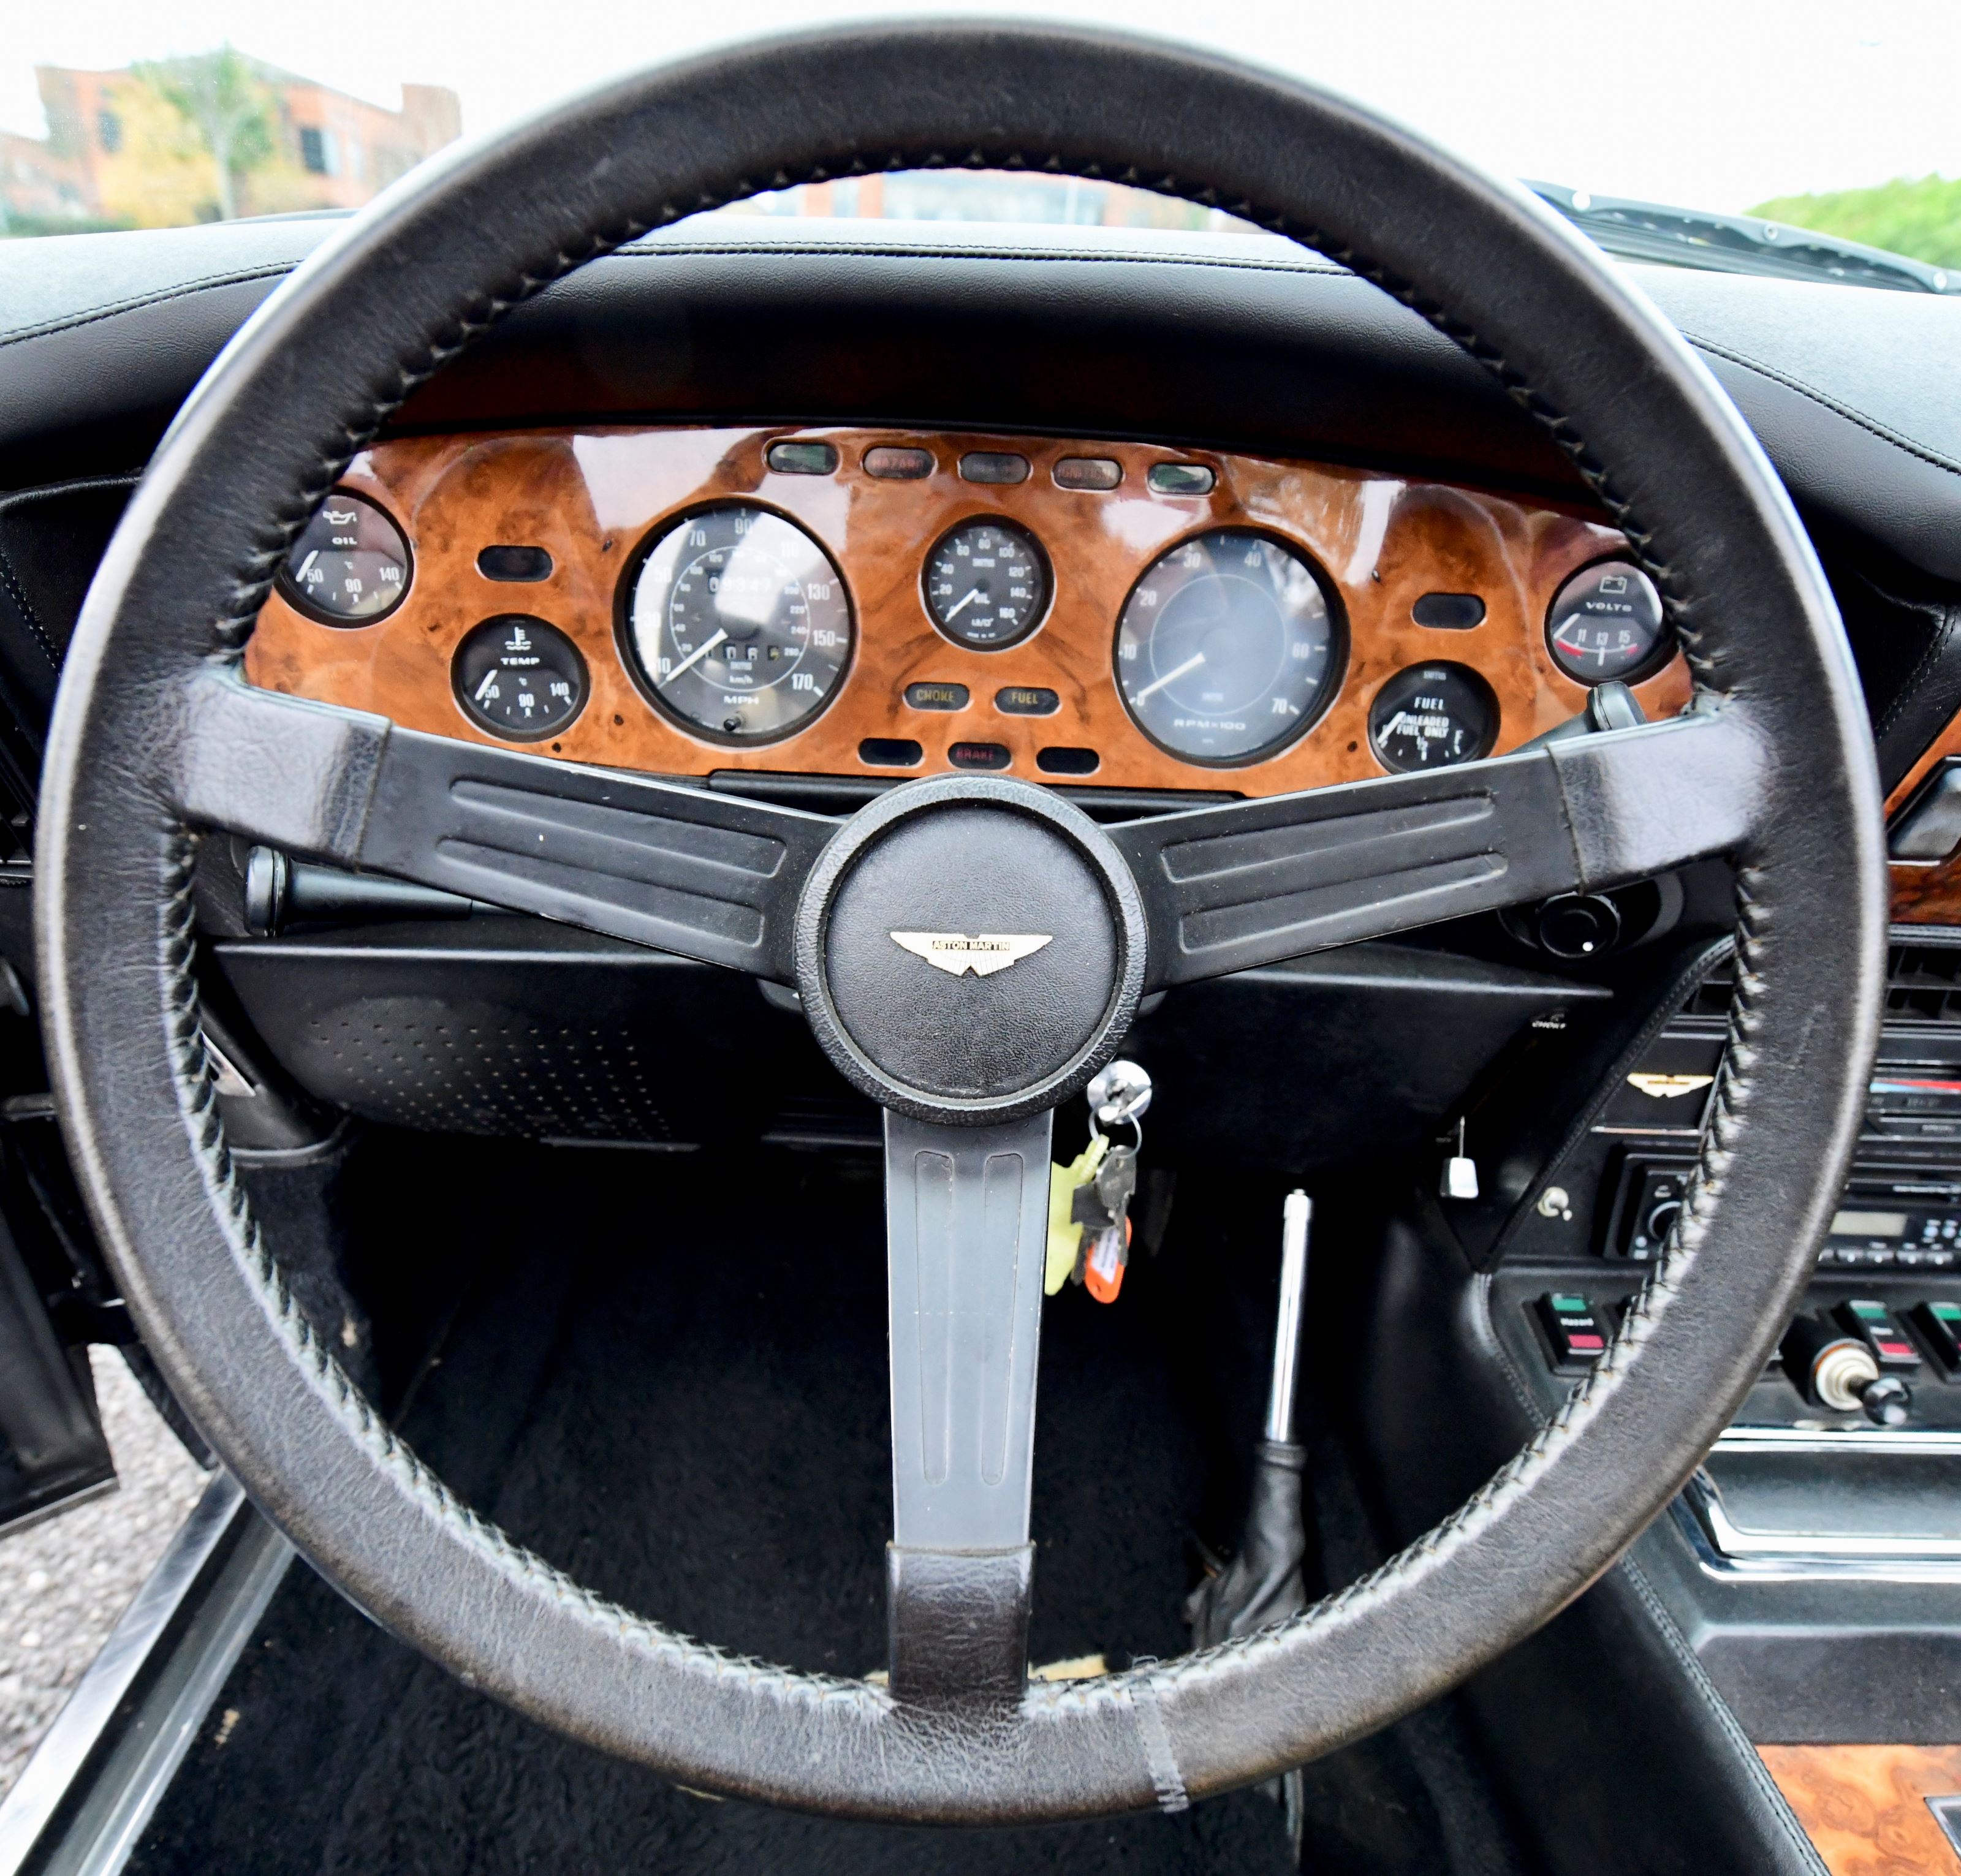 Aston martin v8  volante left hand drive automatic  fpfexinrexuxcmvrcqjjy